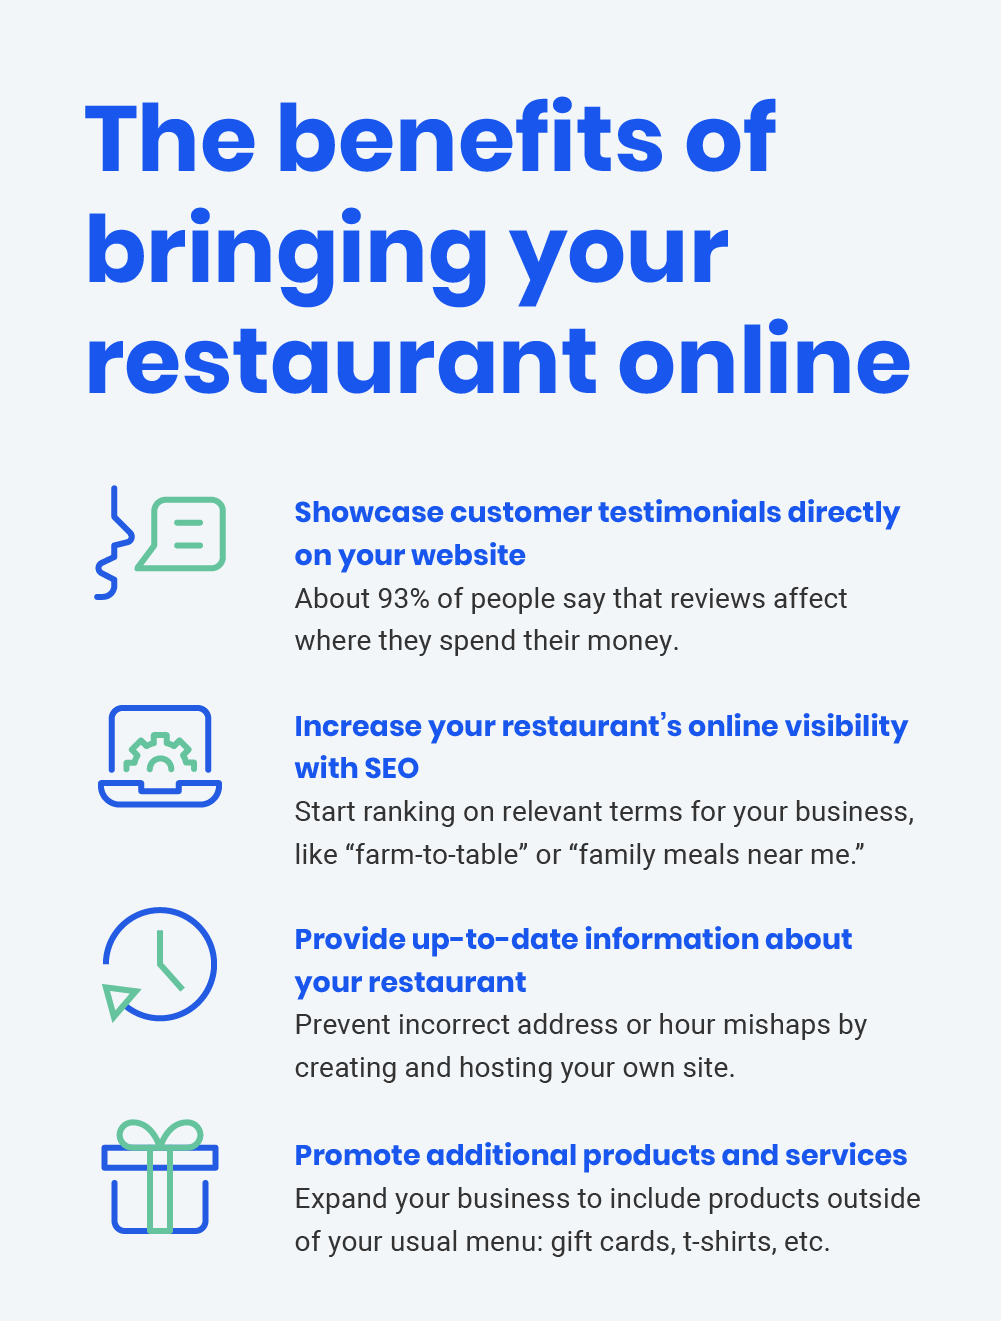 The benefits of bringing your restaurant online